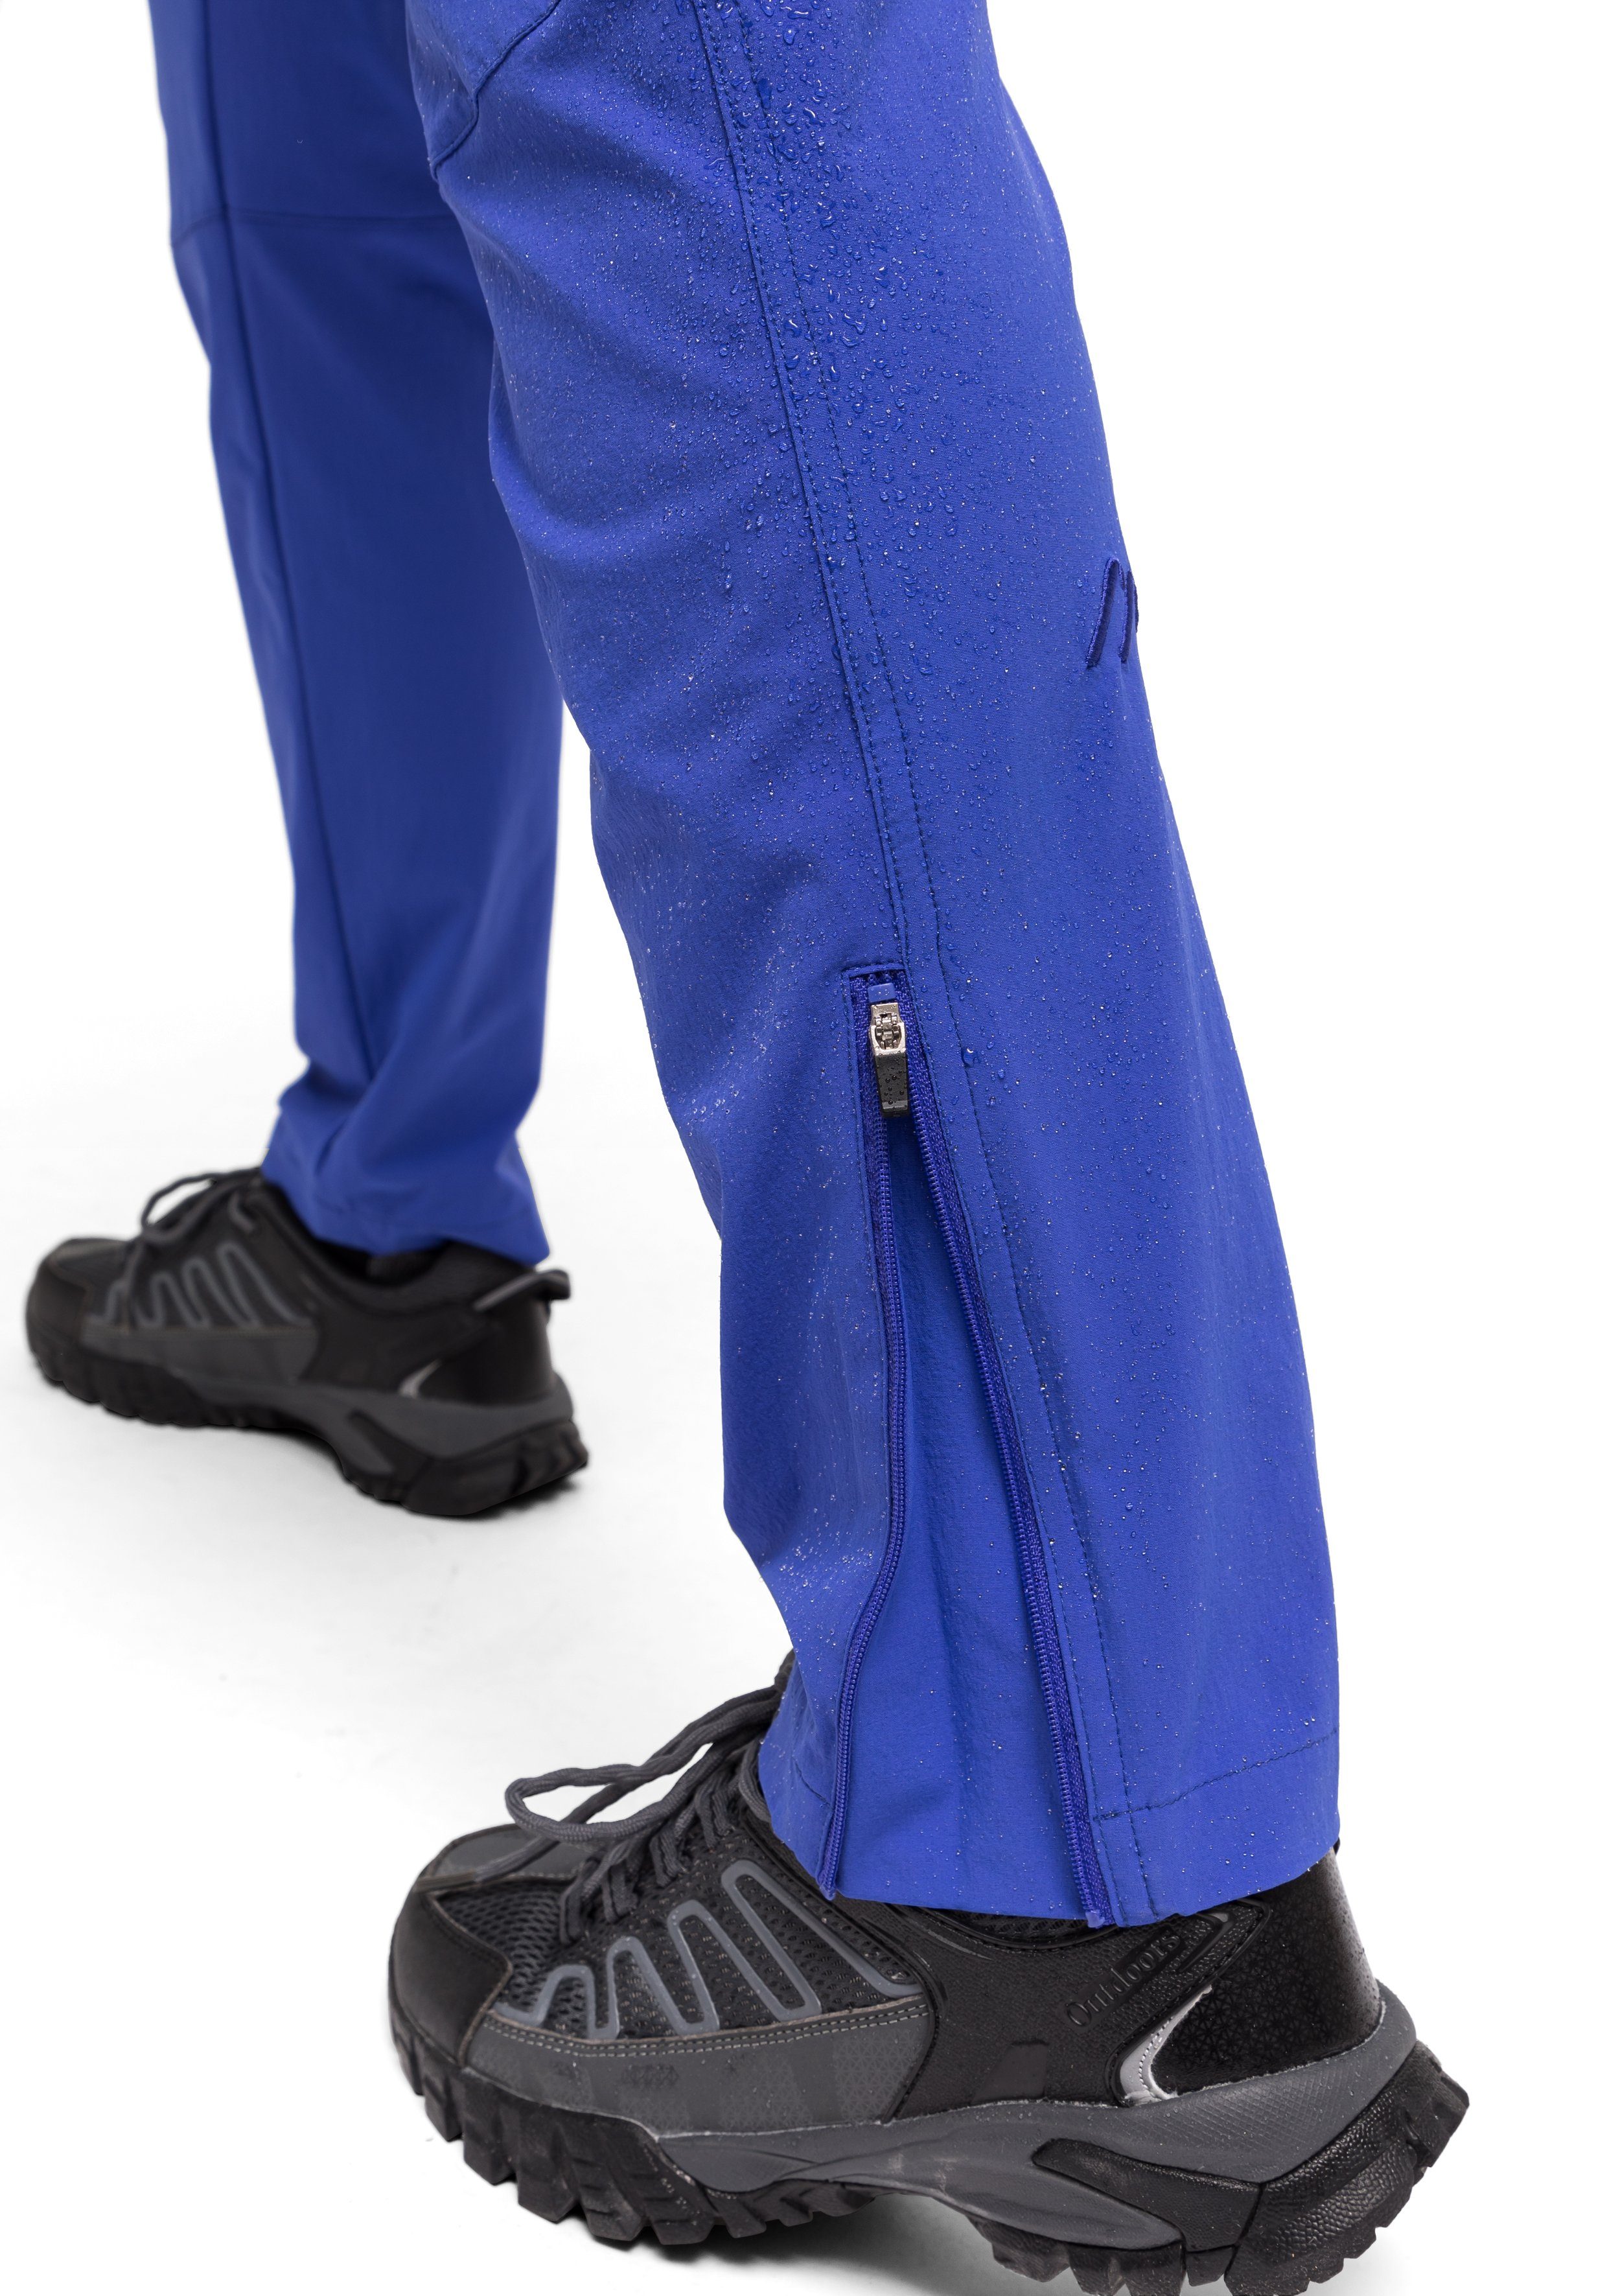 elastischem Sports Damen Outdoor-Hose Material Inara Maier darkblue Funktionshose slim Wanderhose, aus